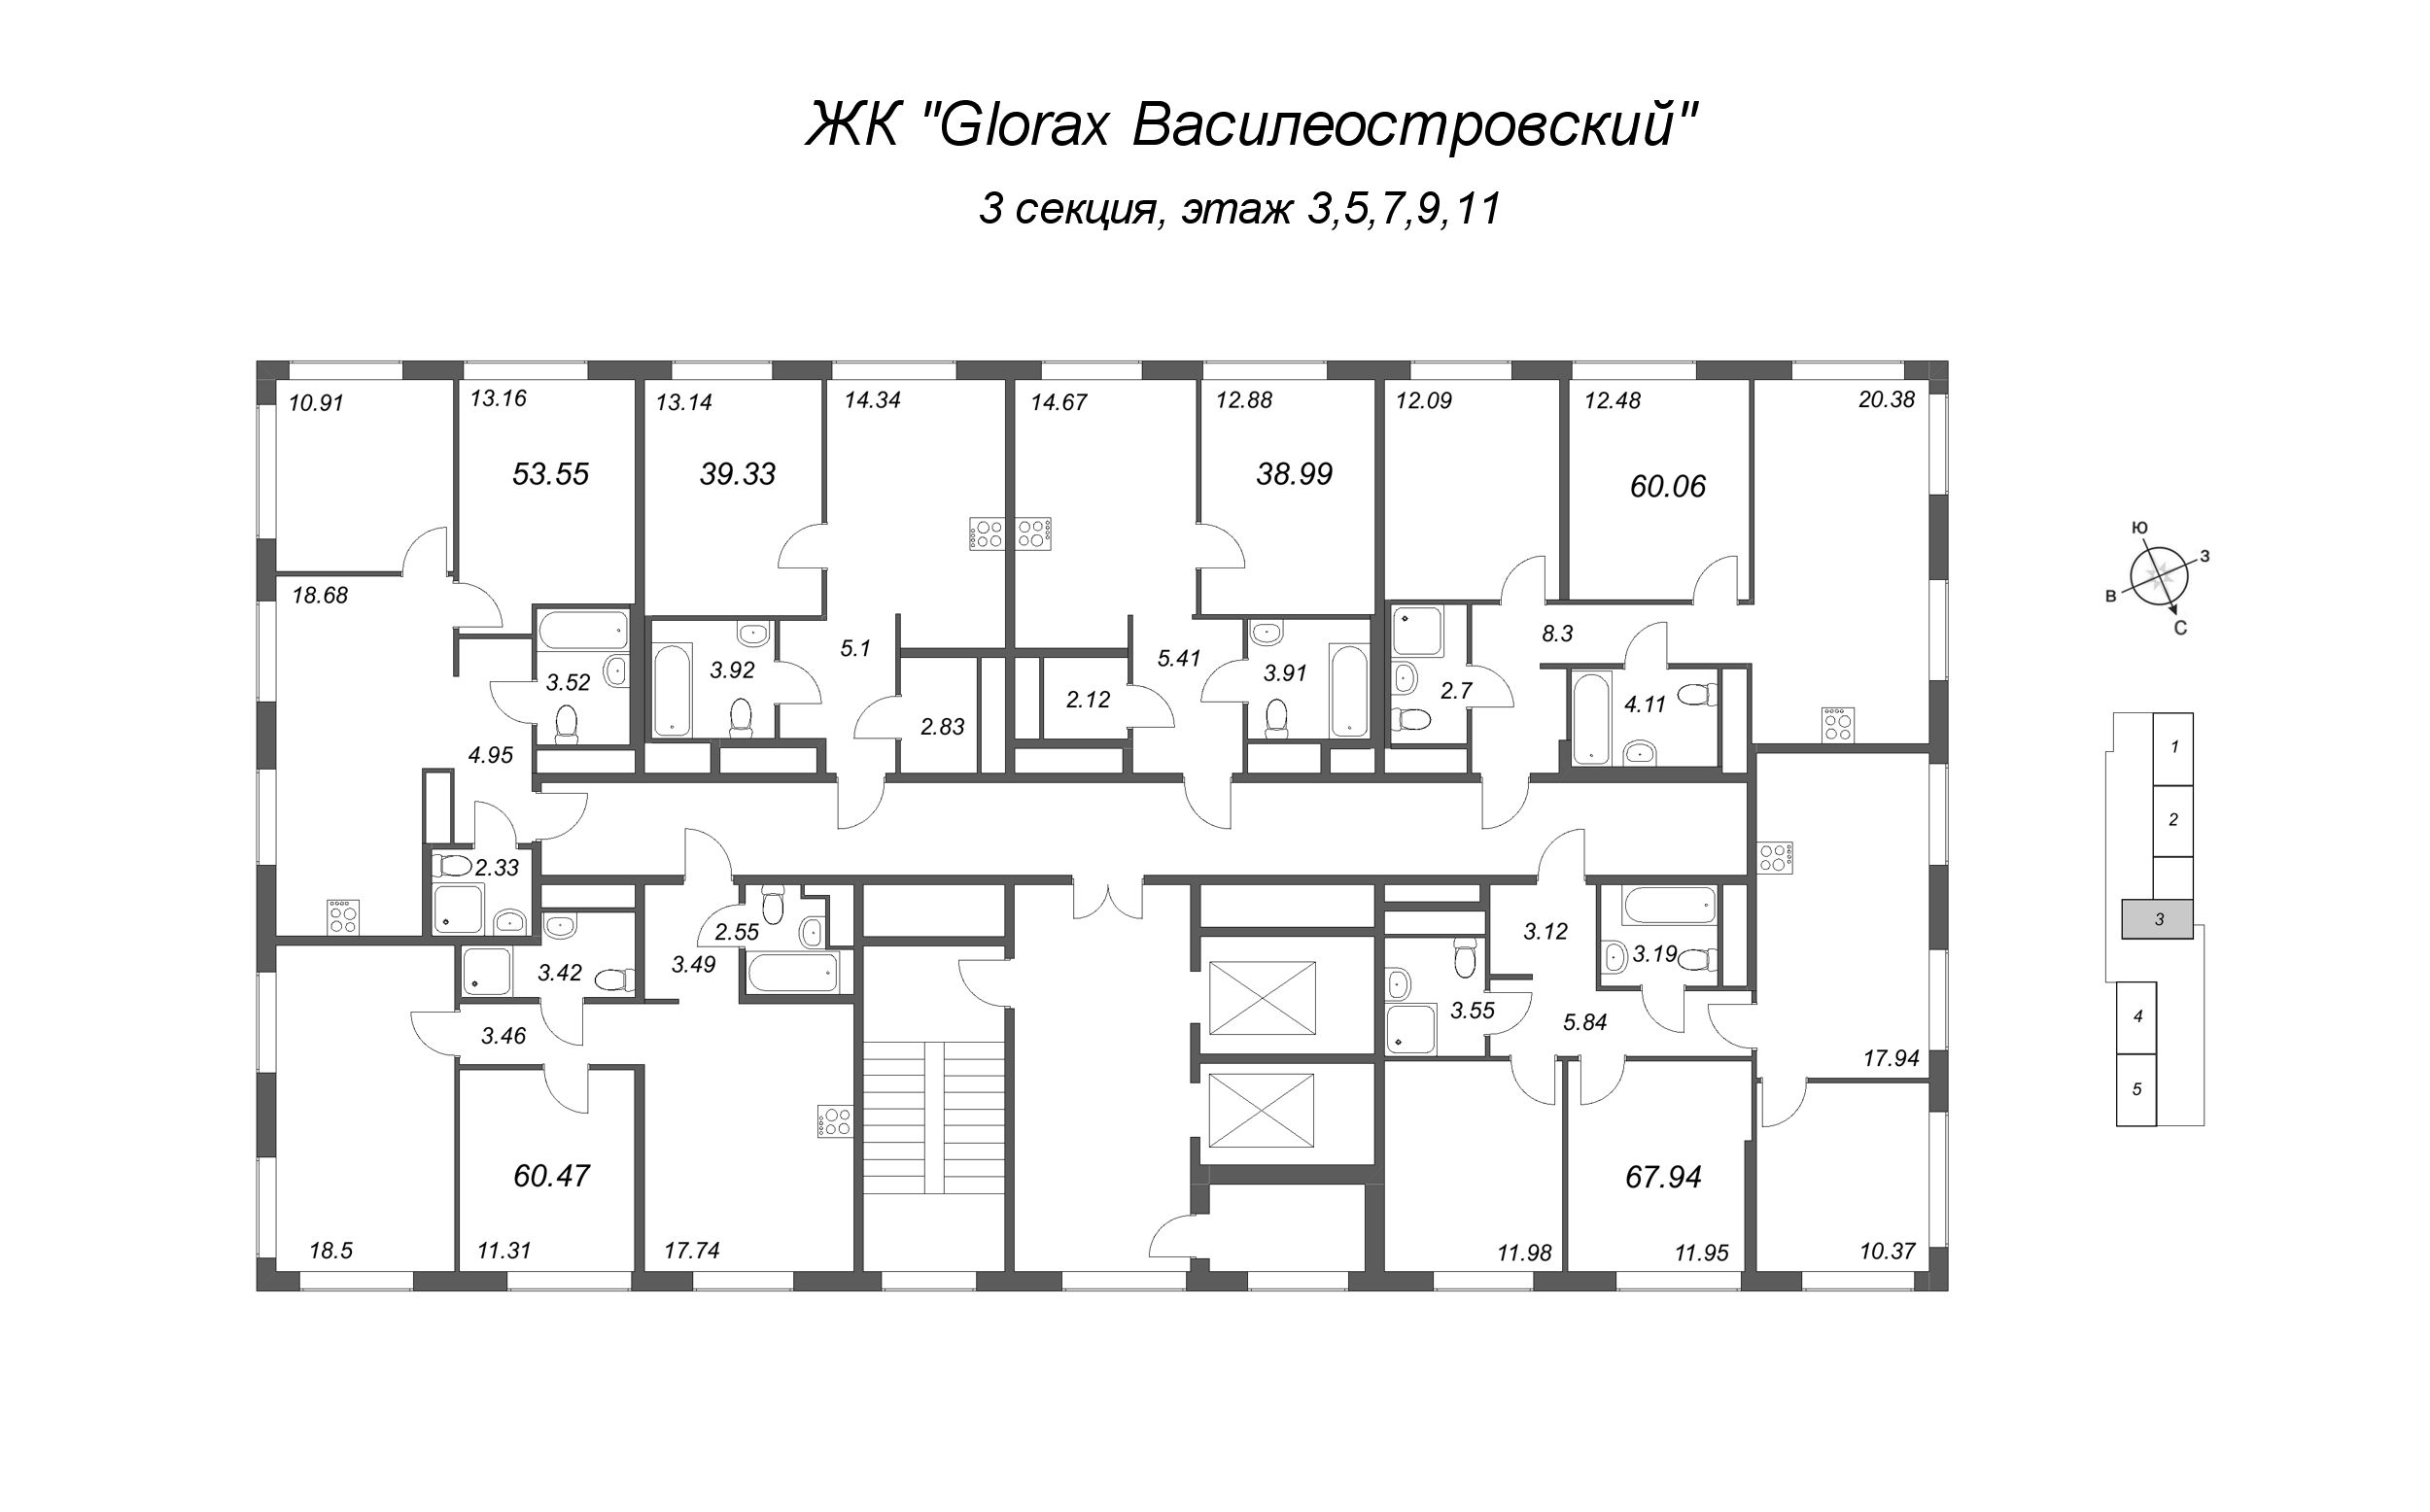 3-комнатная (Евро) квартира, 60.06 м² - планировка этажа